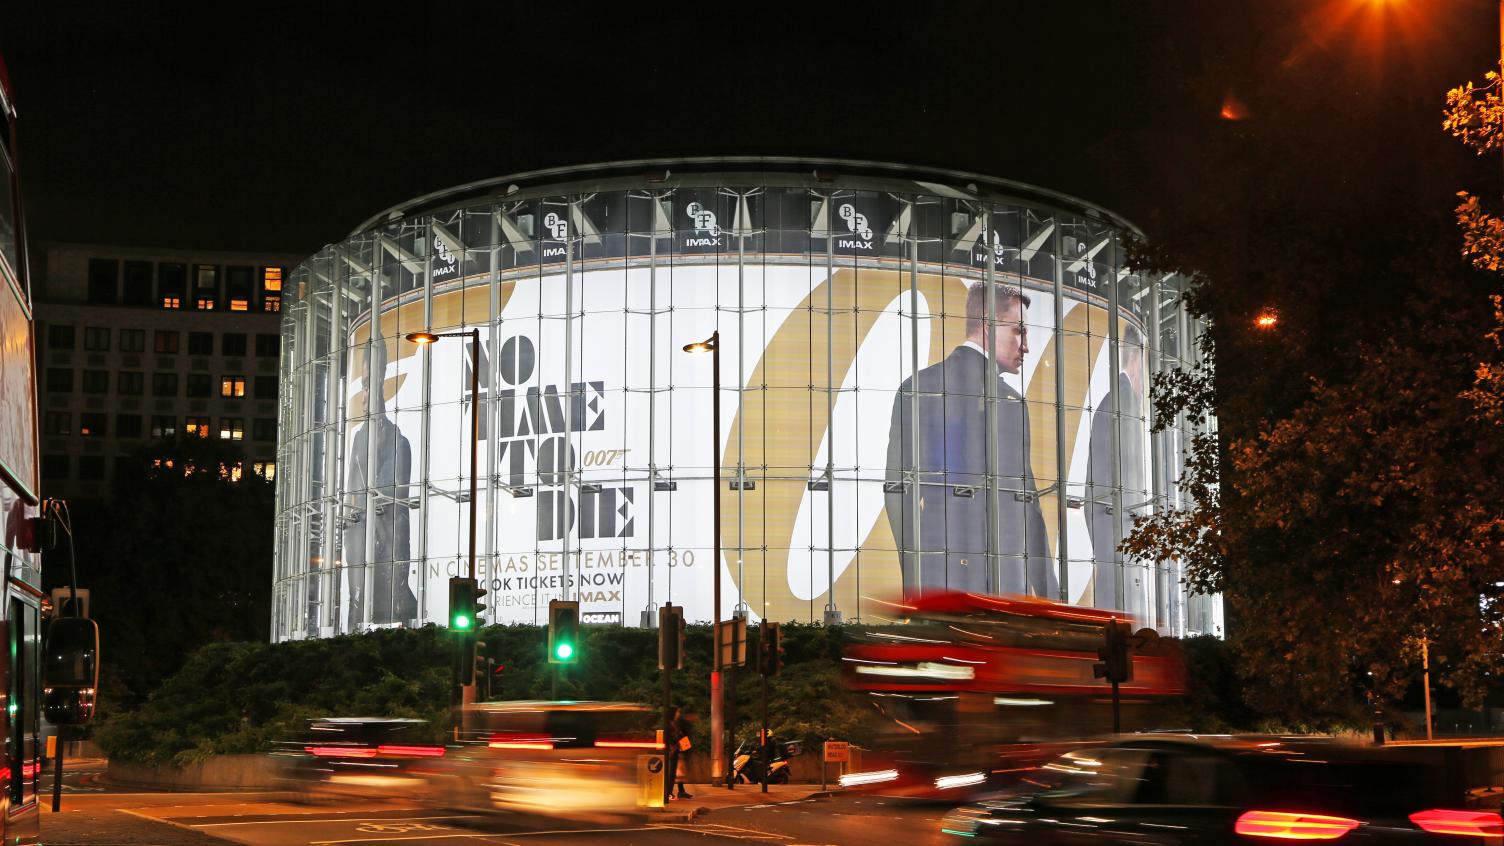 James Bond on BFI IMAX building